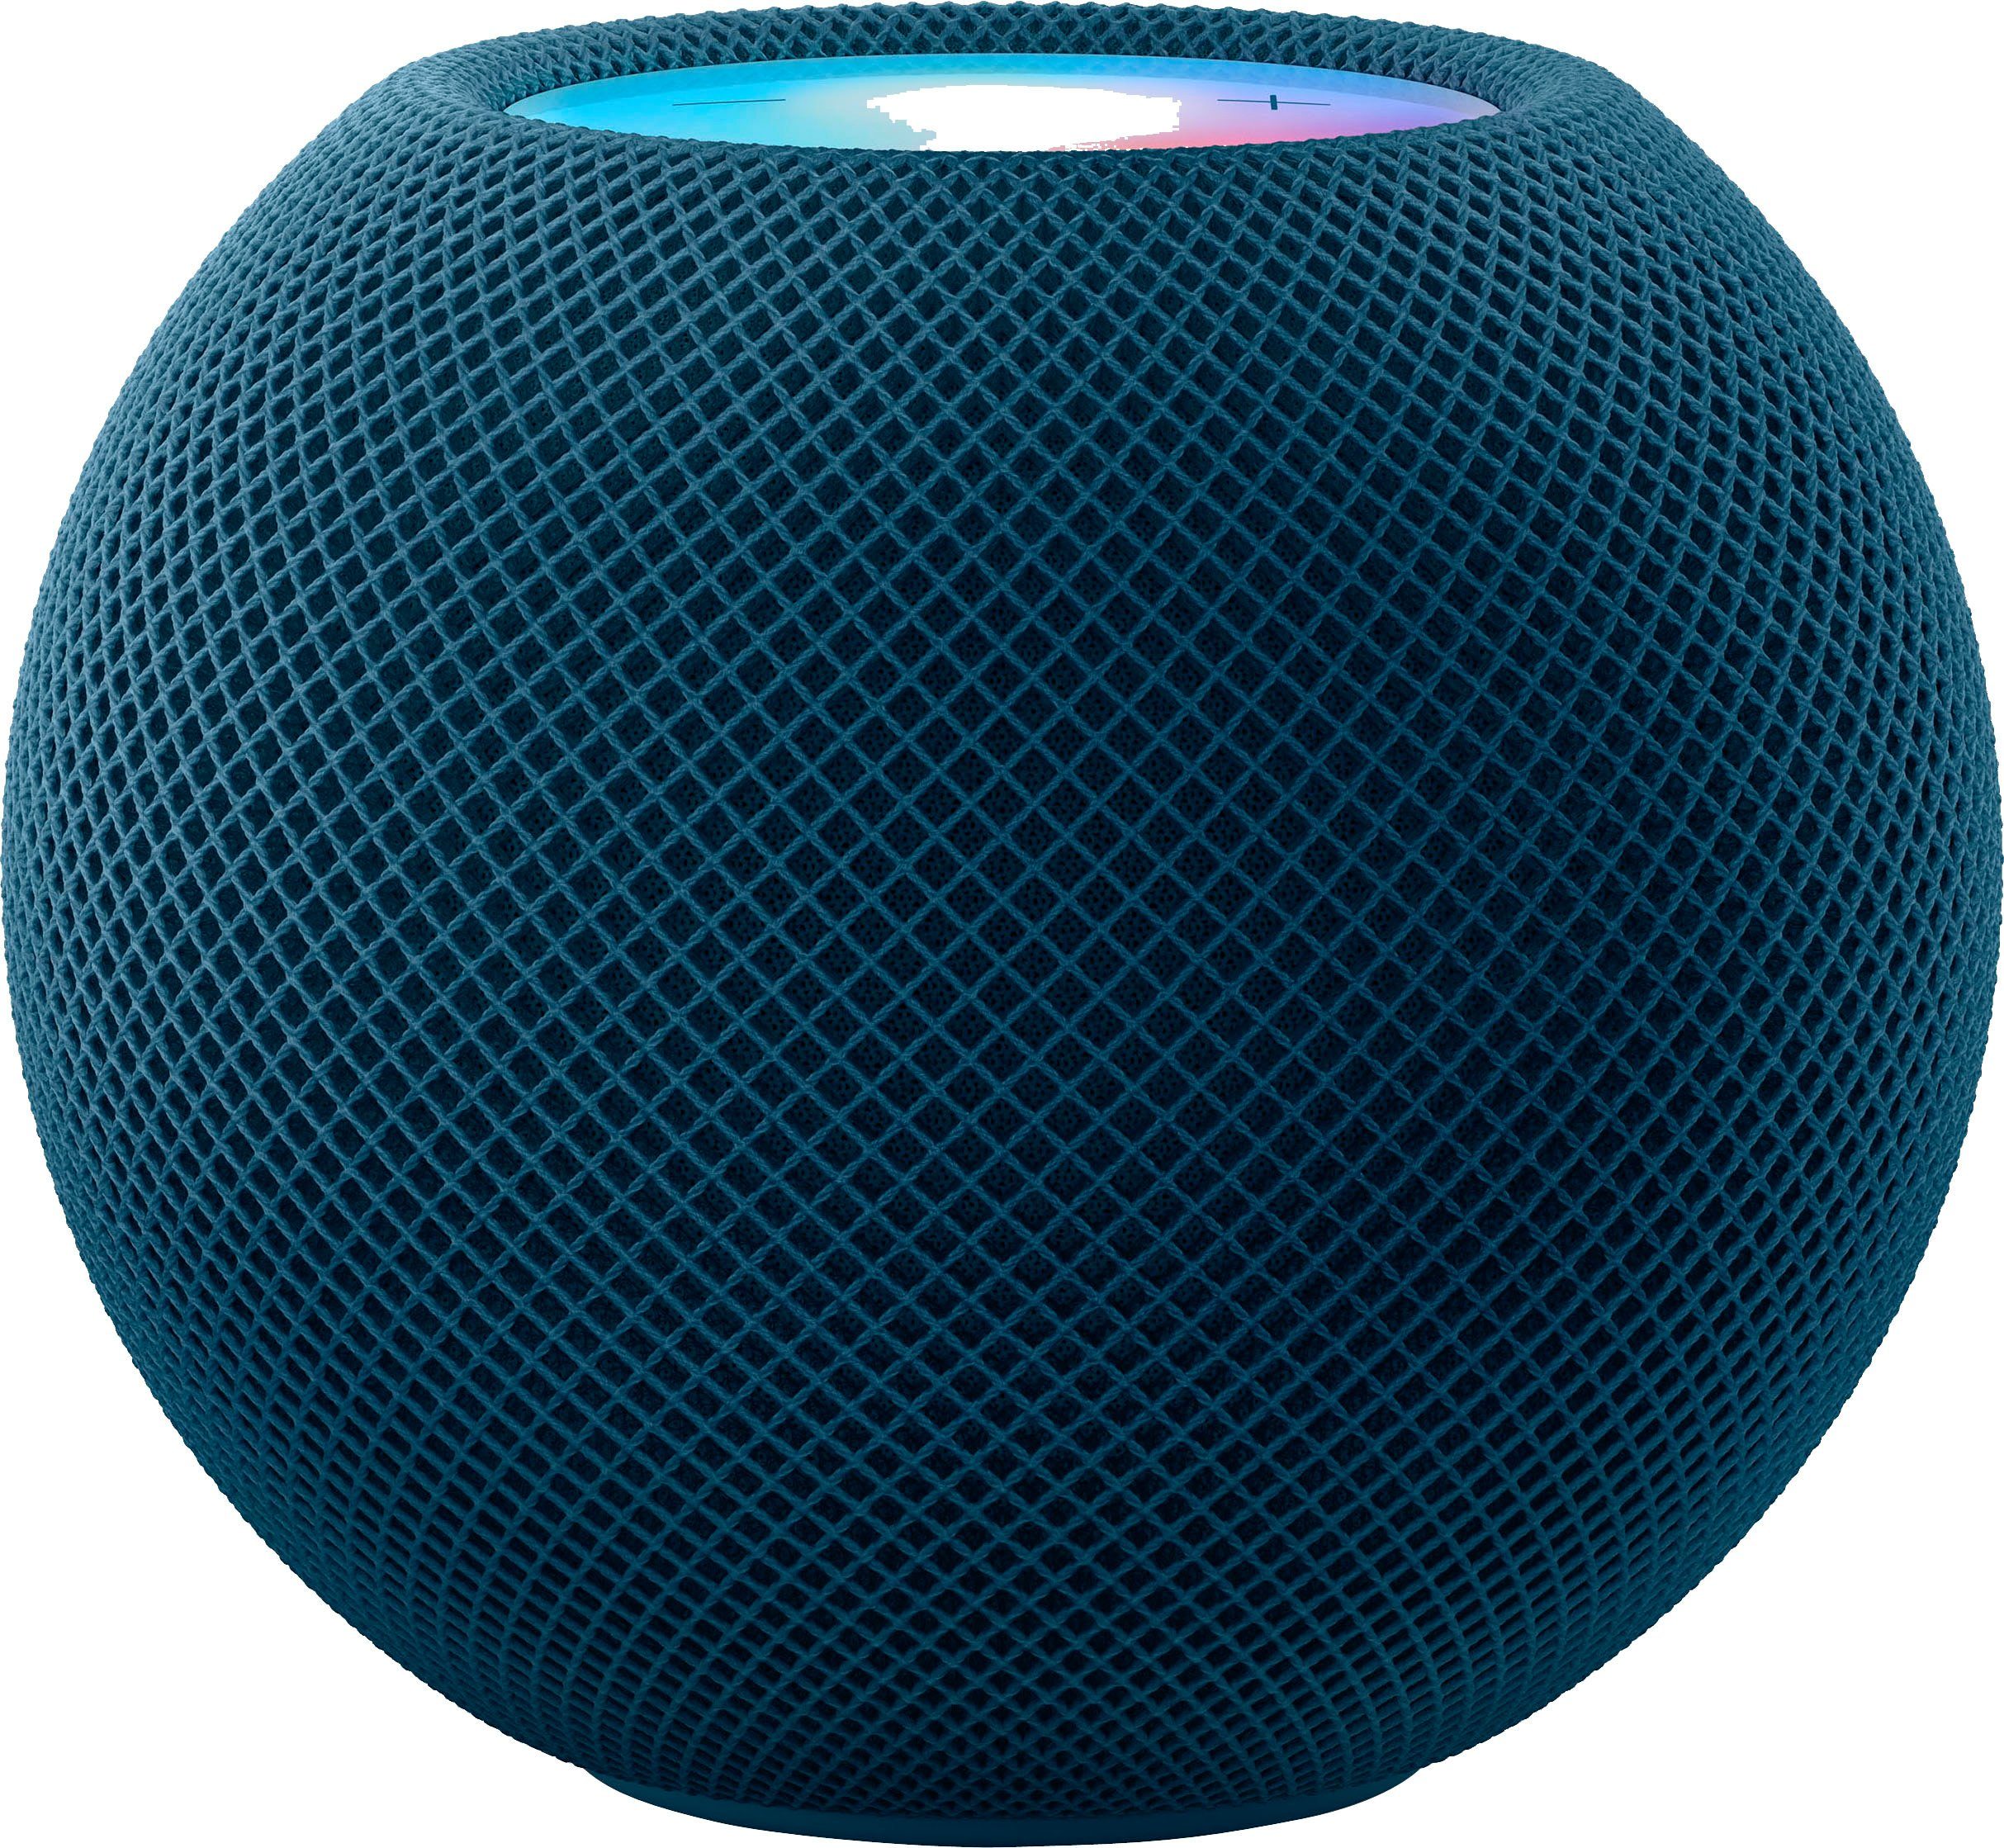 Apple HomePod blau WLAN mini Lautsprecher (Bluetooth, (WiFi)